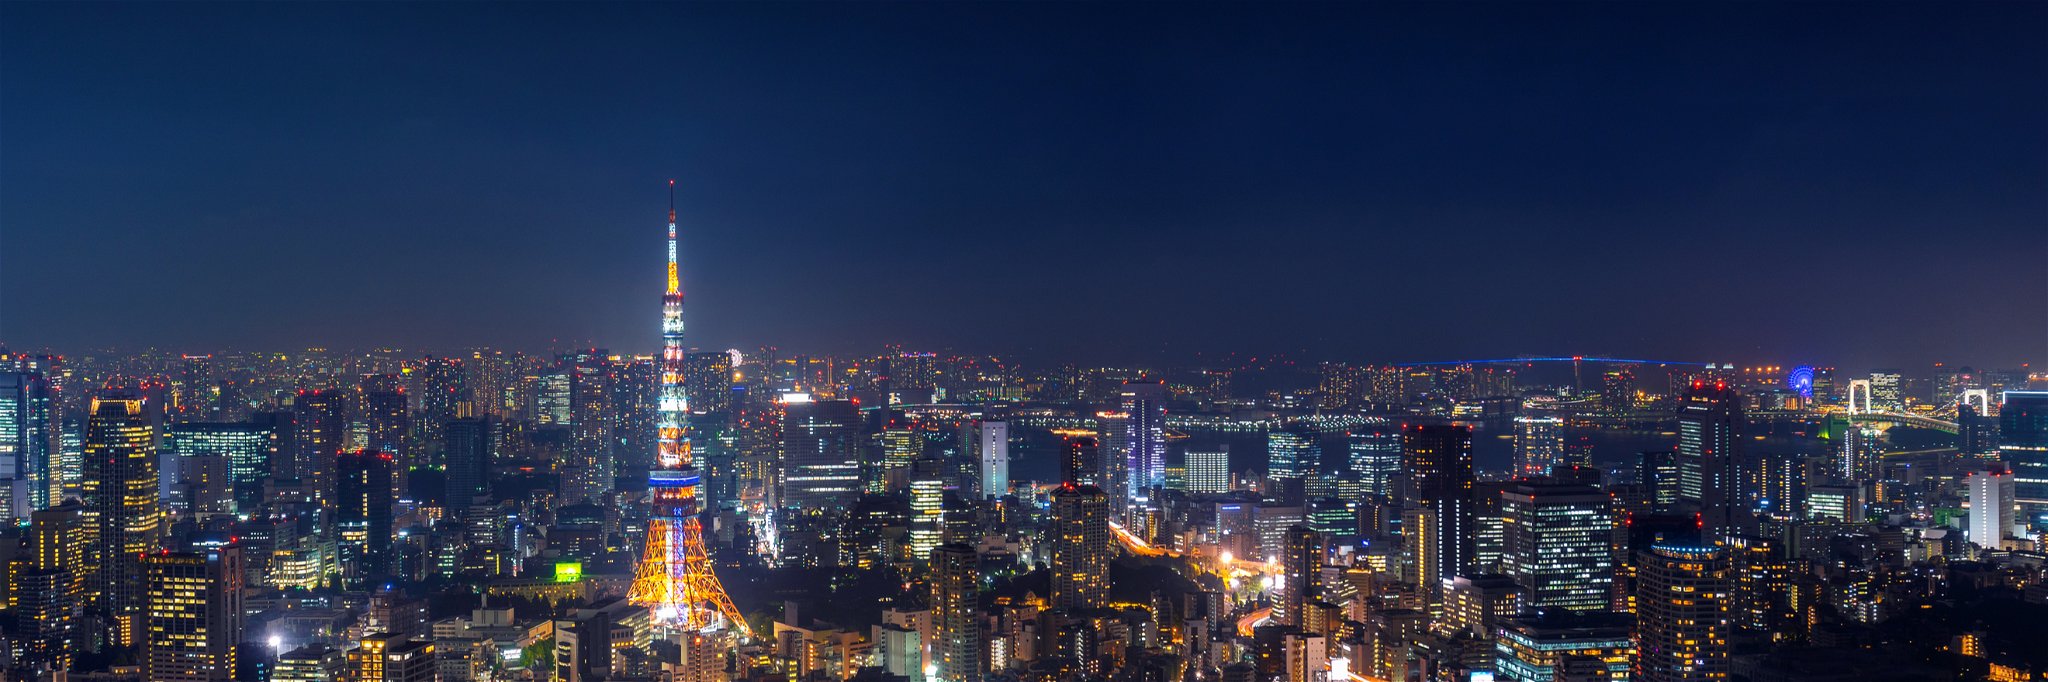 The Tokyo skyline at night.